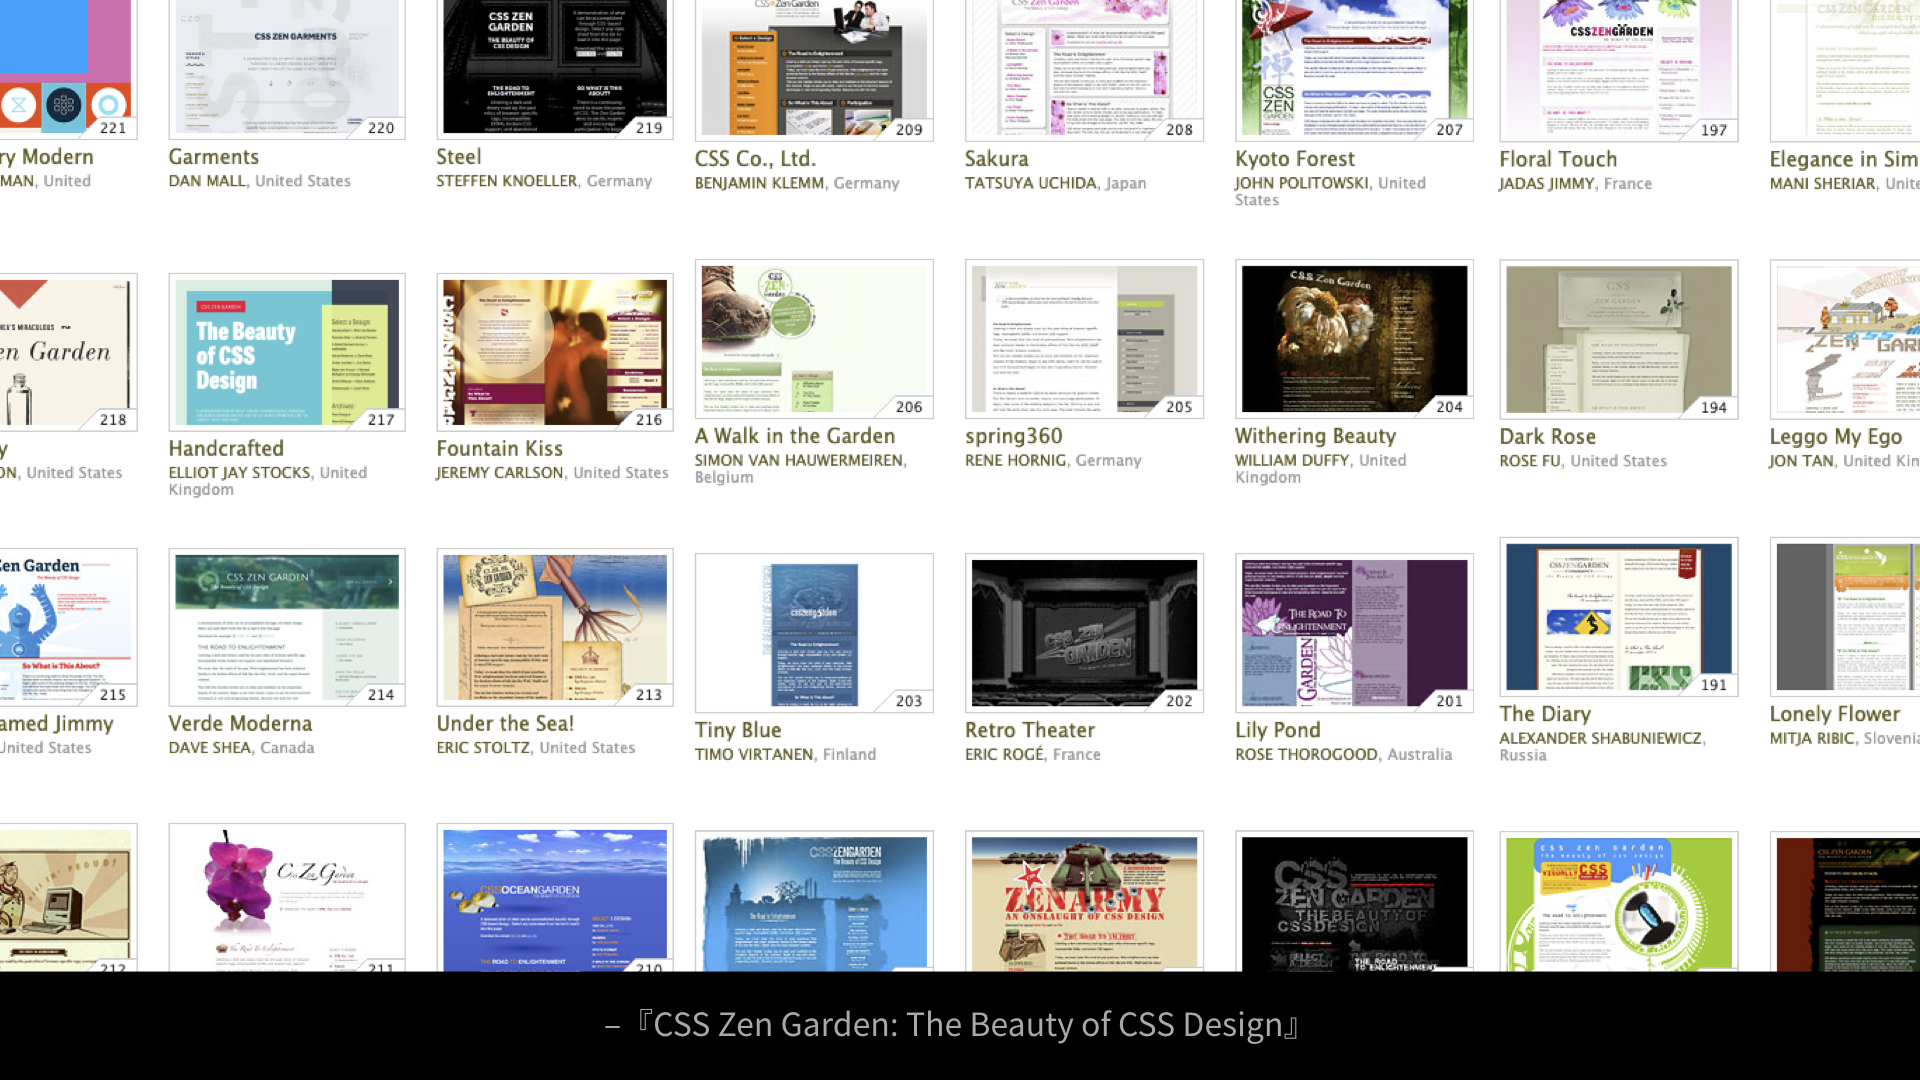 『CSS Zen Garden』には多様なデザインのページが大量に掲載されています。